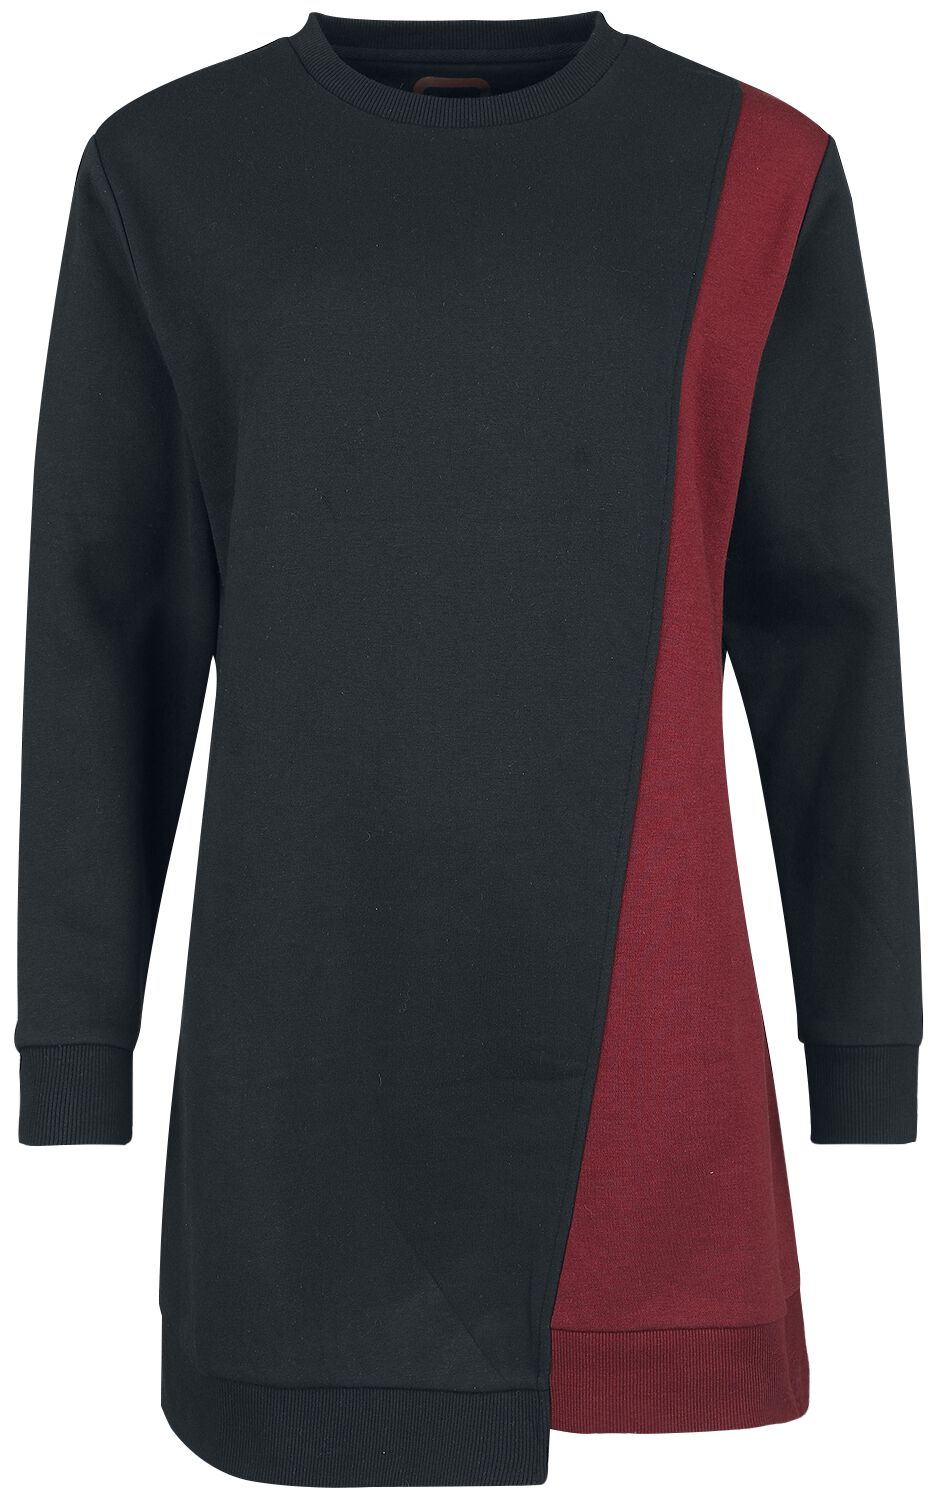 RED by EMP Sweatshirt Dress with asymmetrical Cut Kurzes Kleid schwarz dunkelrot in S